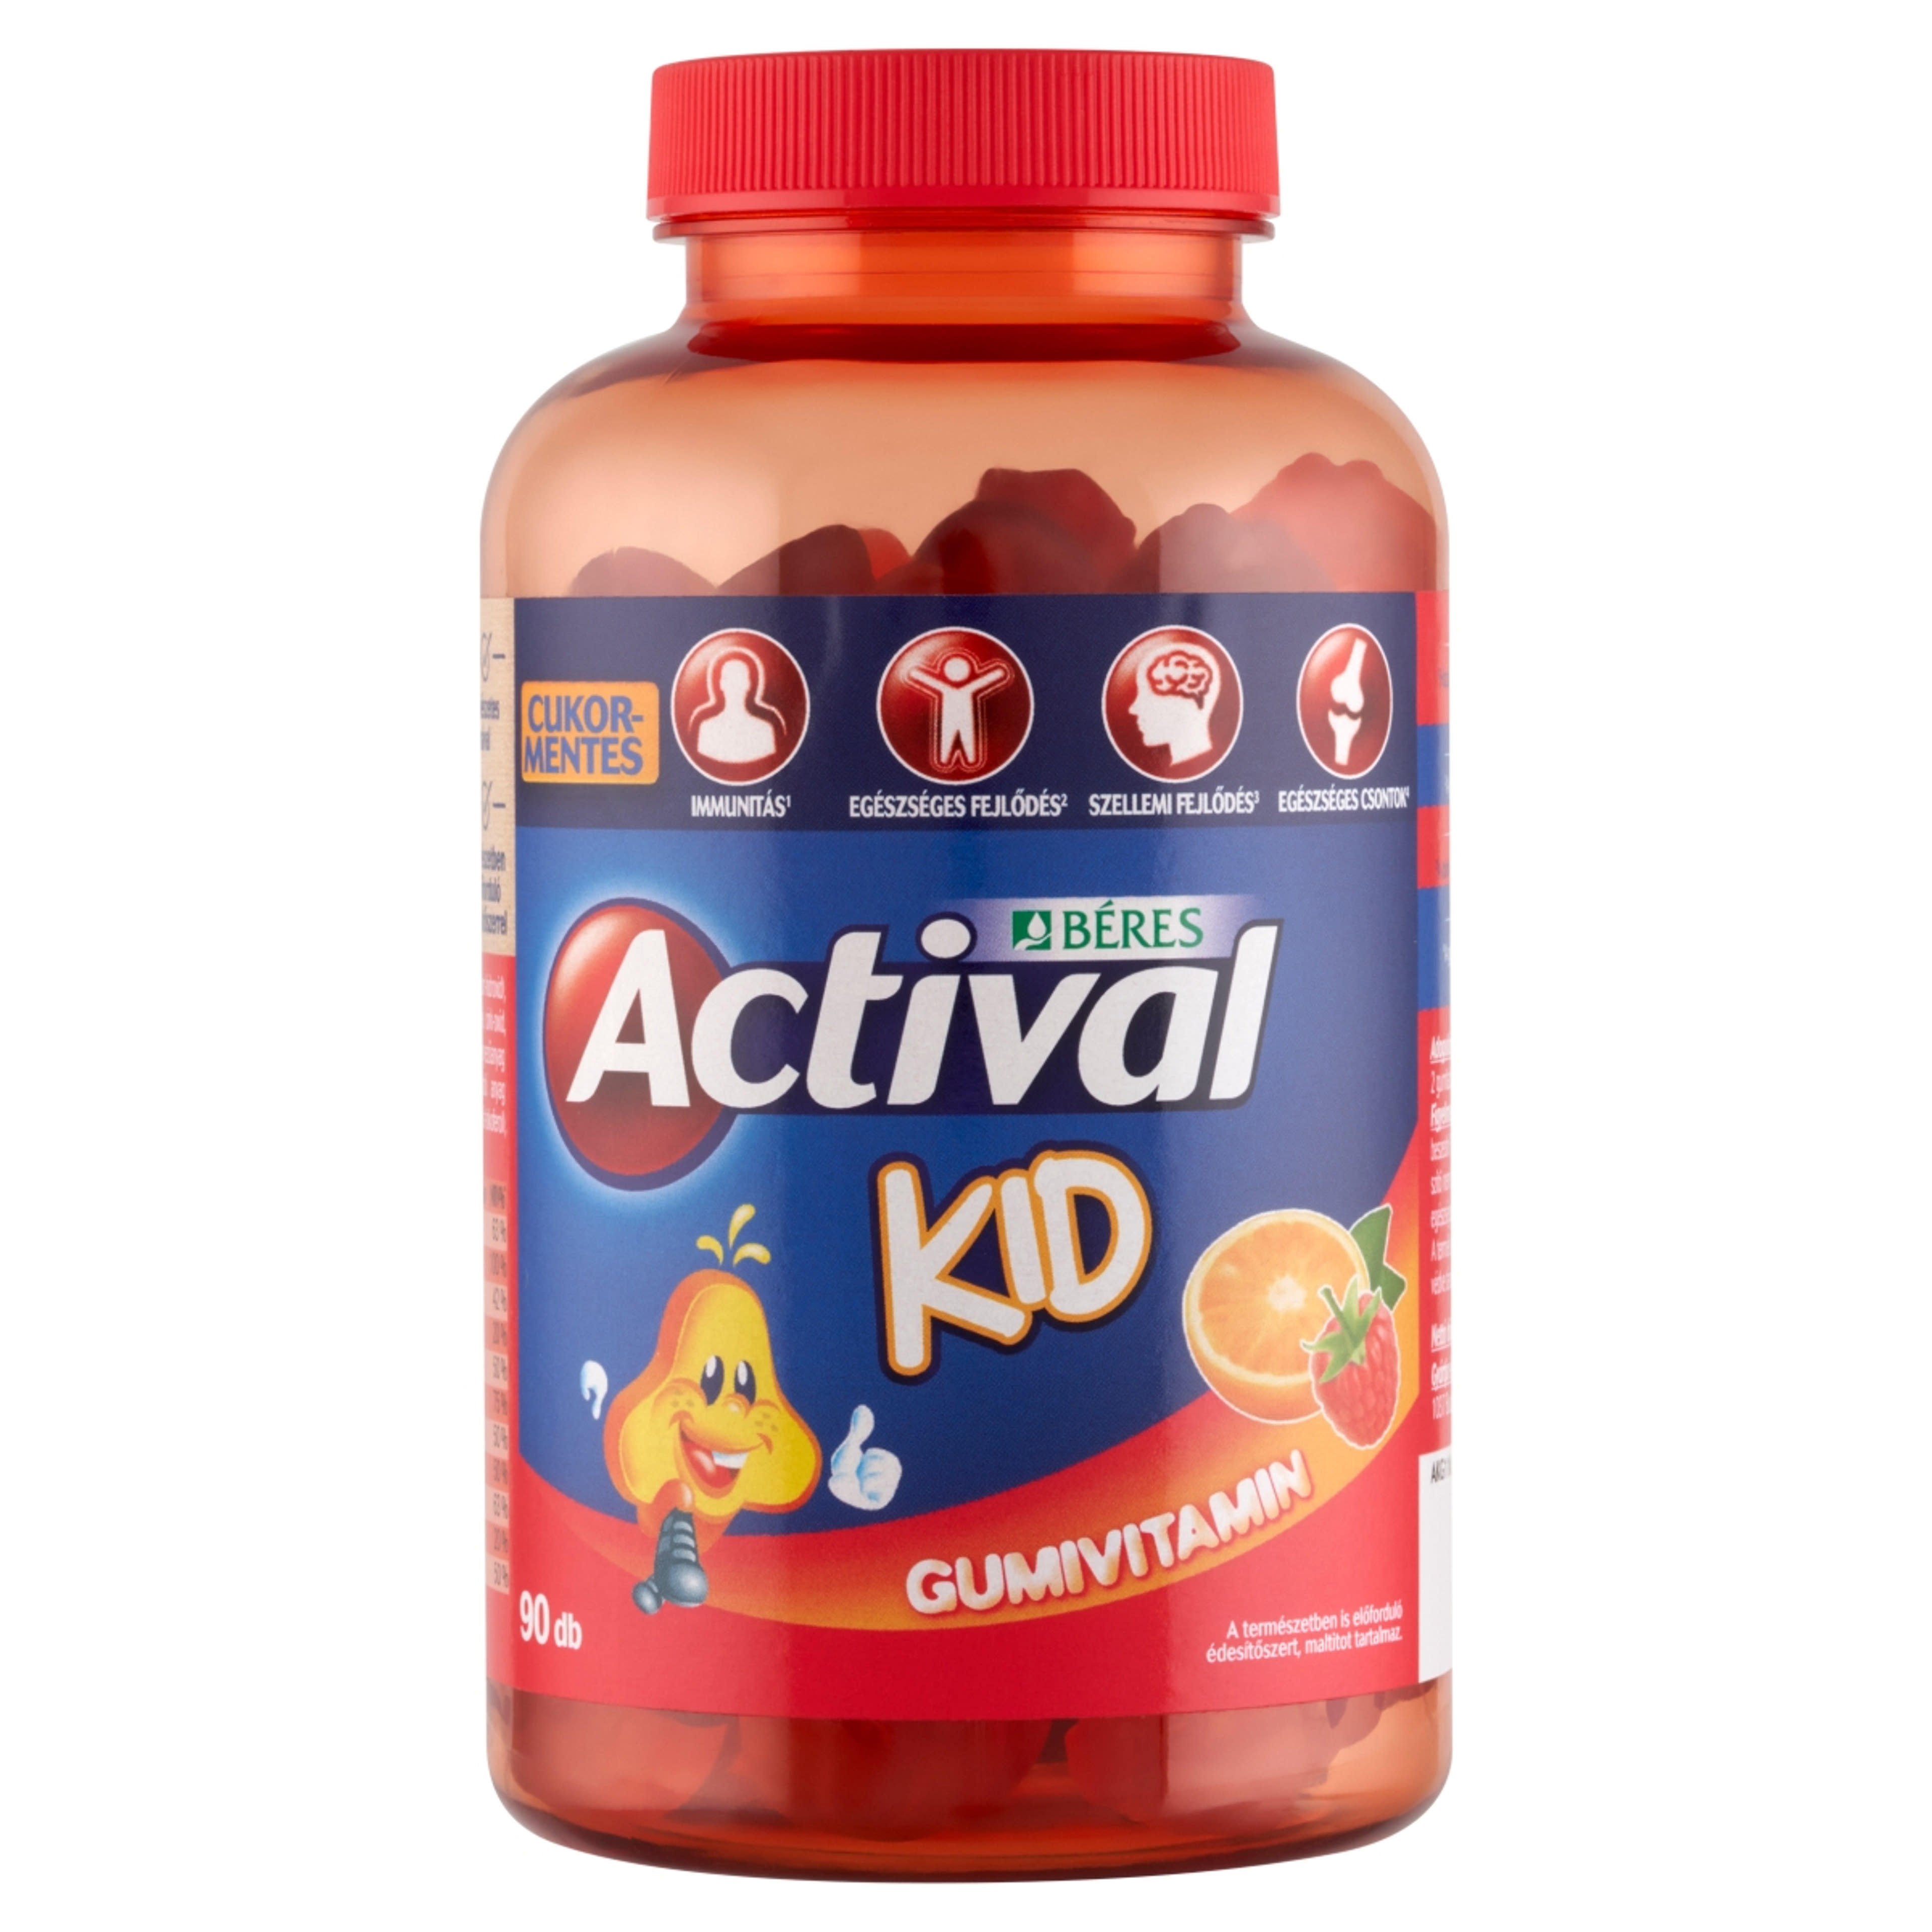 Béres Actival Kid multivitamin gumivitamin narancs és málna ízben - 90 db-2